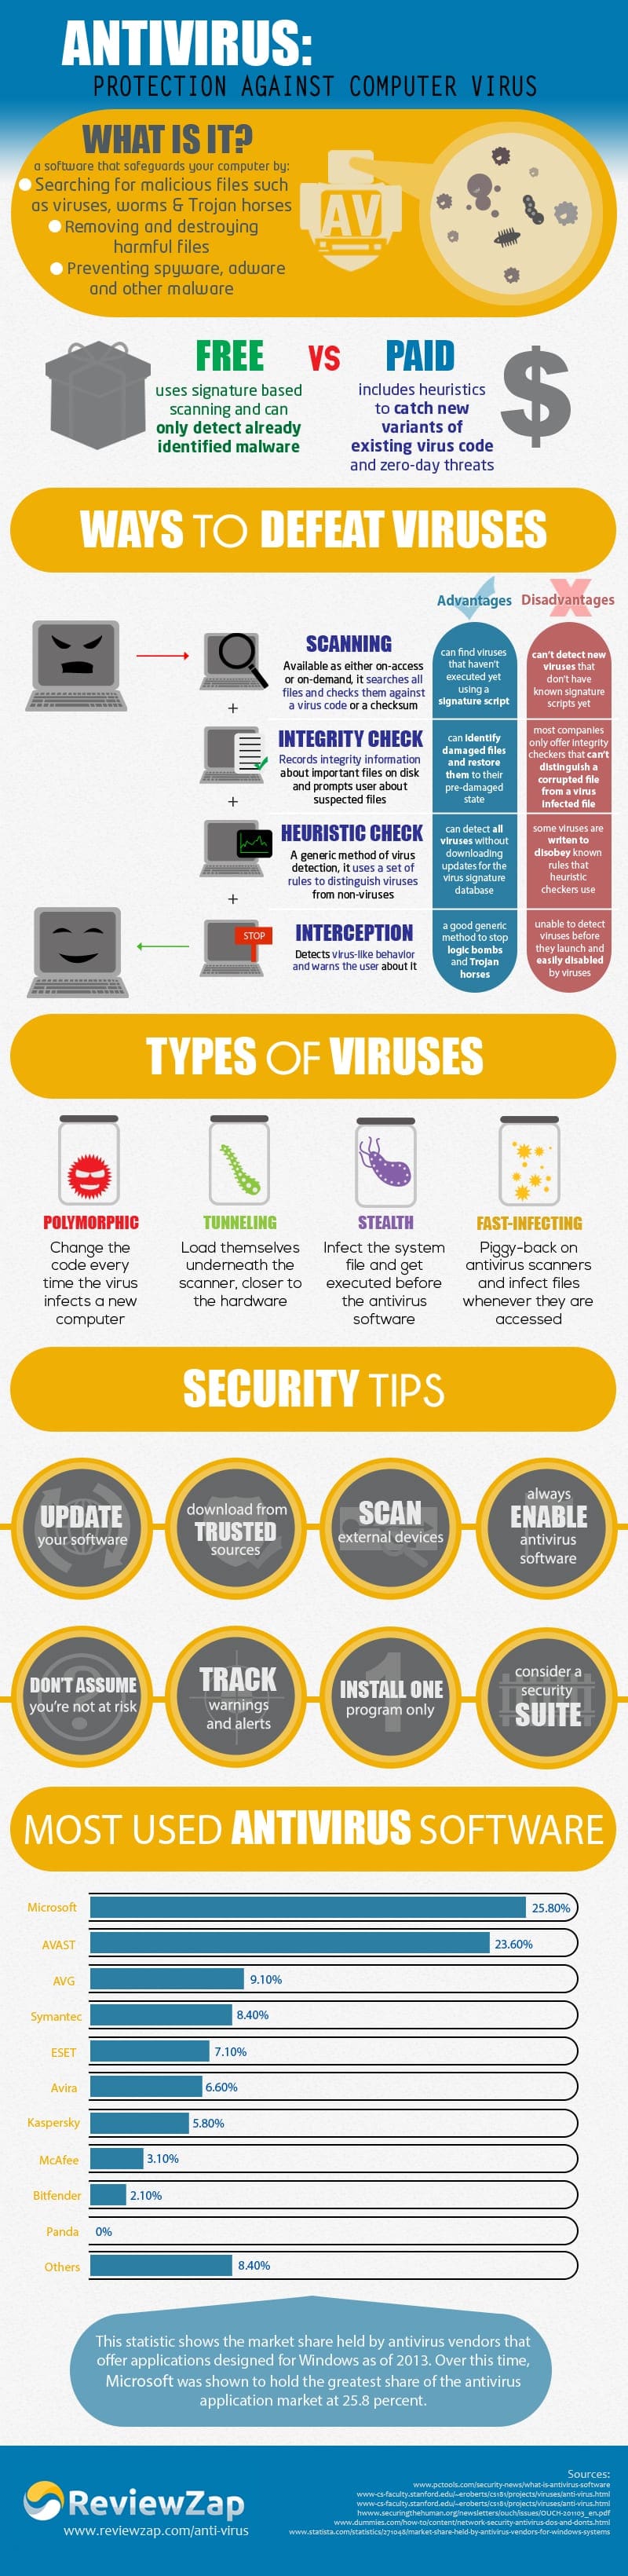 Free antivirus Software vs paid - infographic